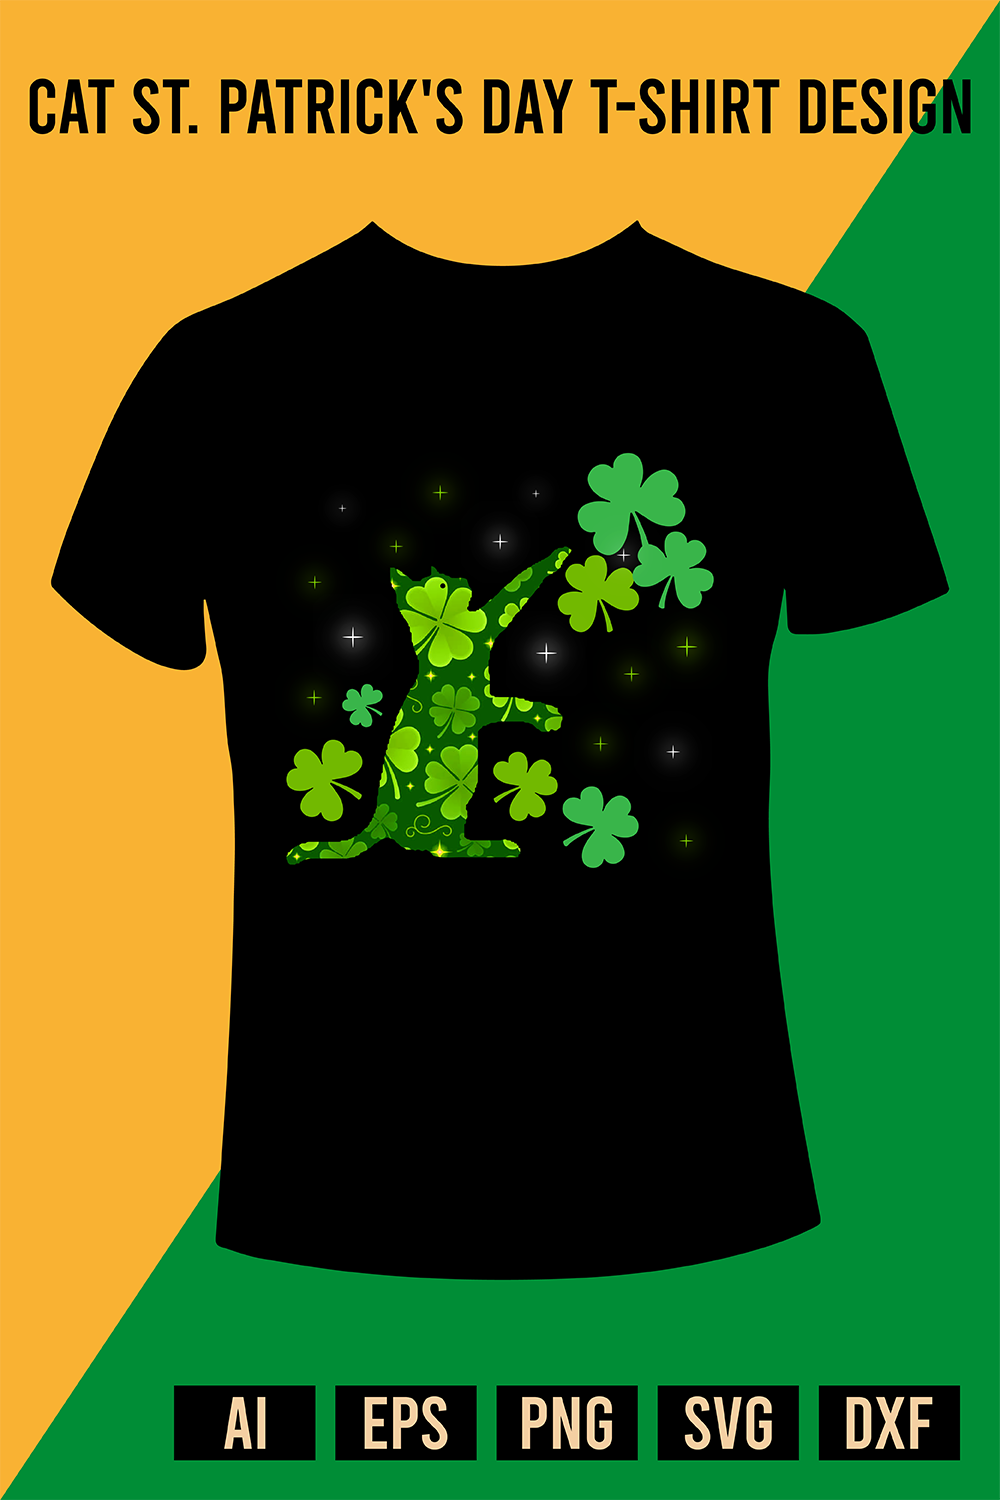 Cat St Patrick's Day T-shirt Design pinterest preview image.